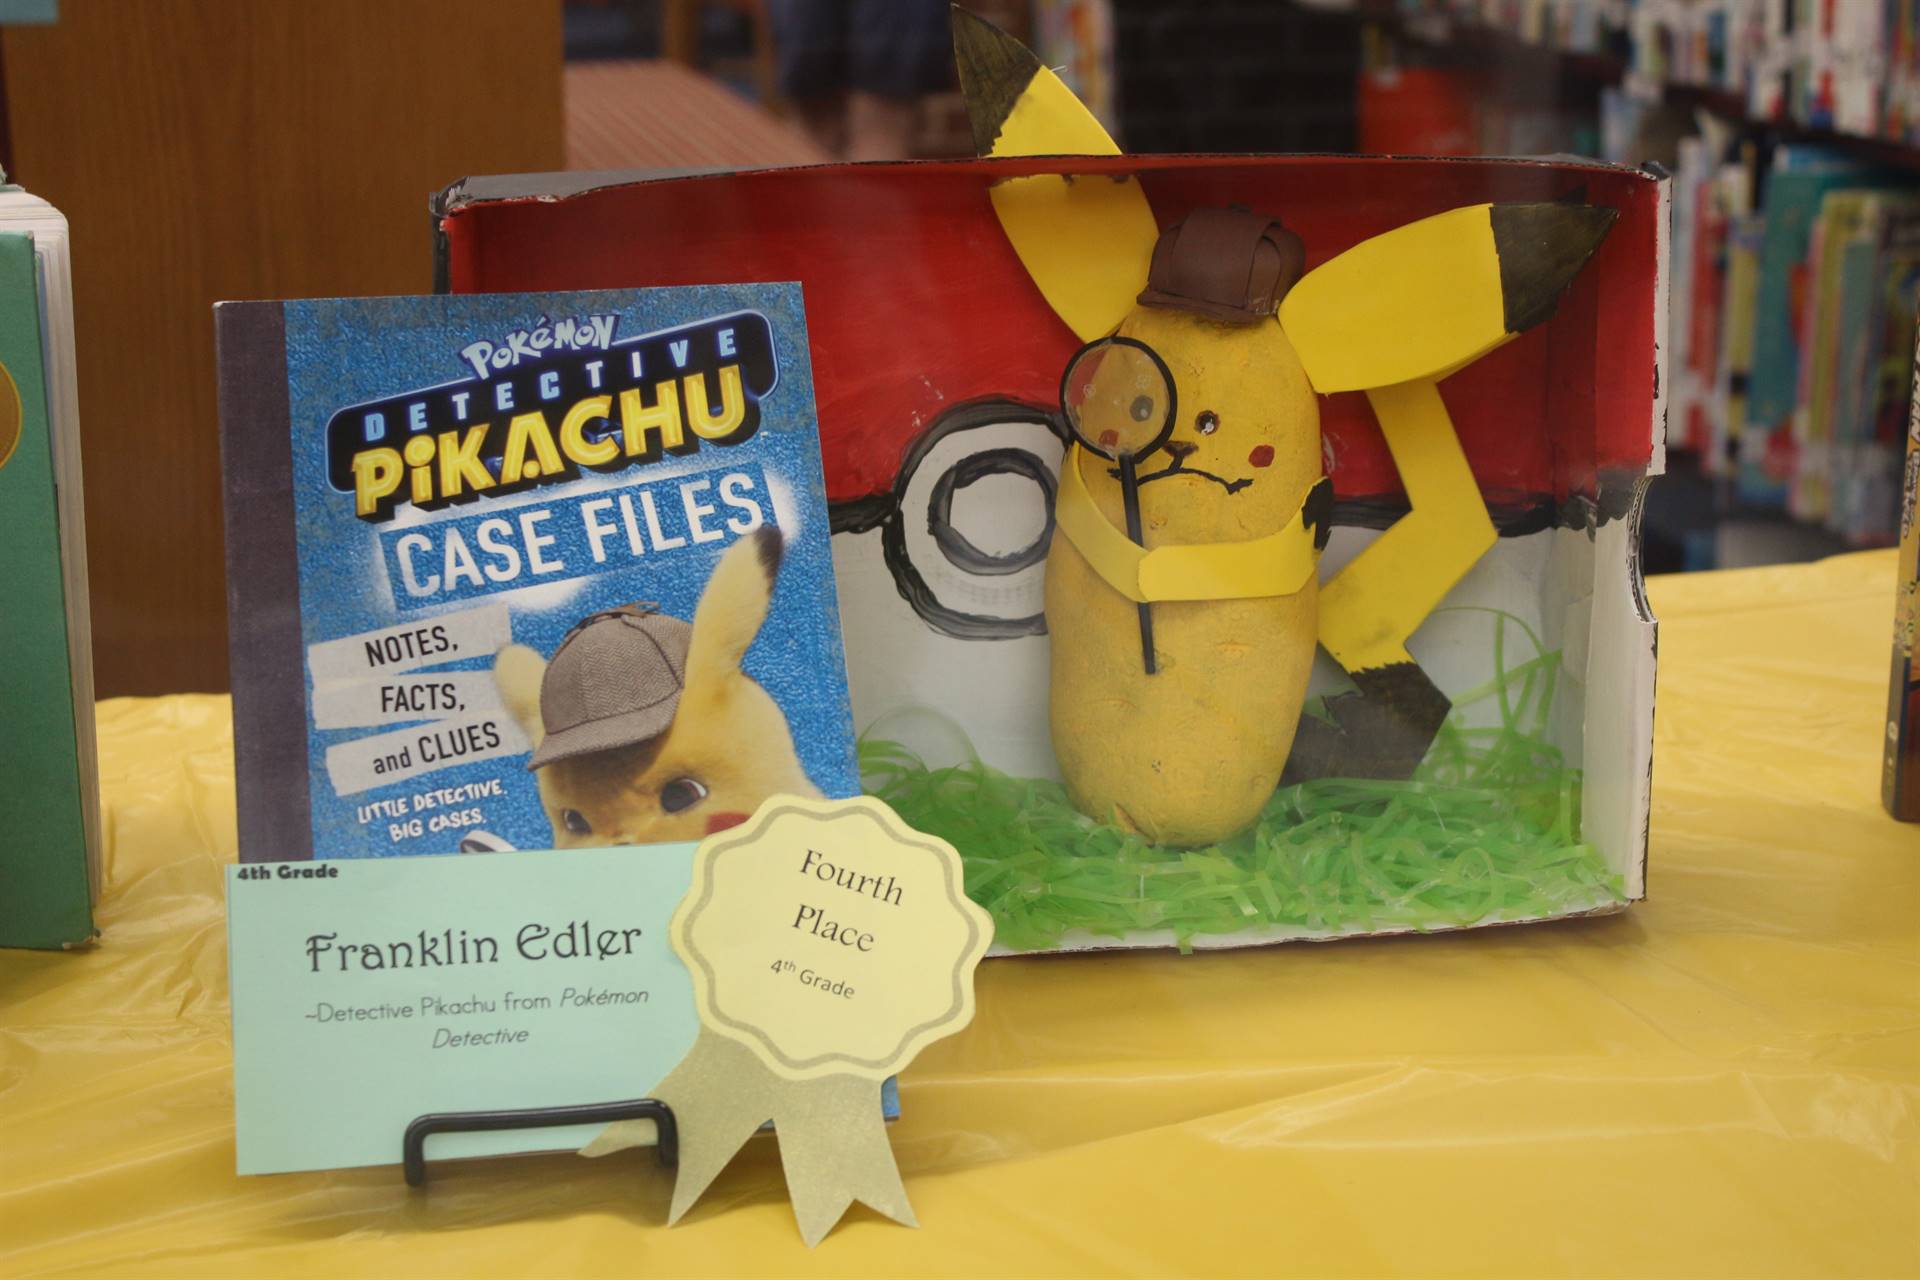 4th Place: Pokémon Detective by Franklin Edler